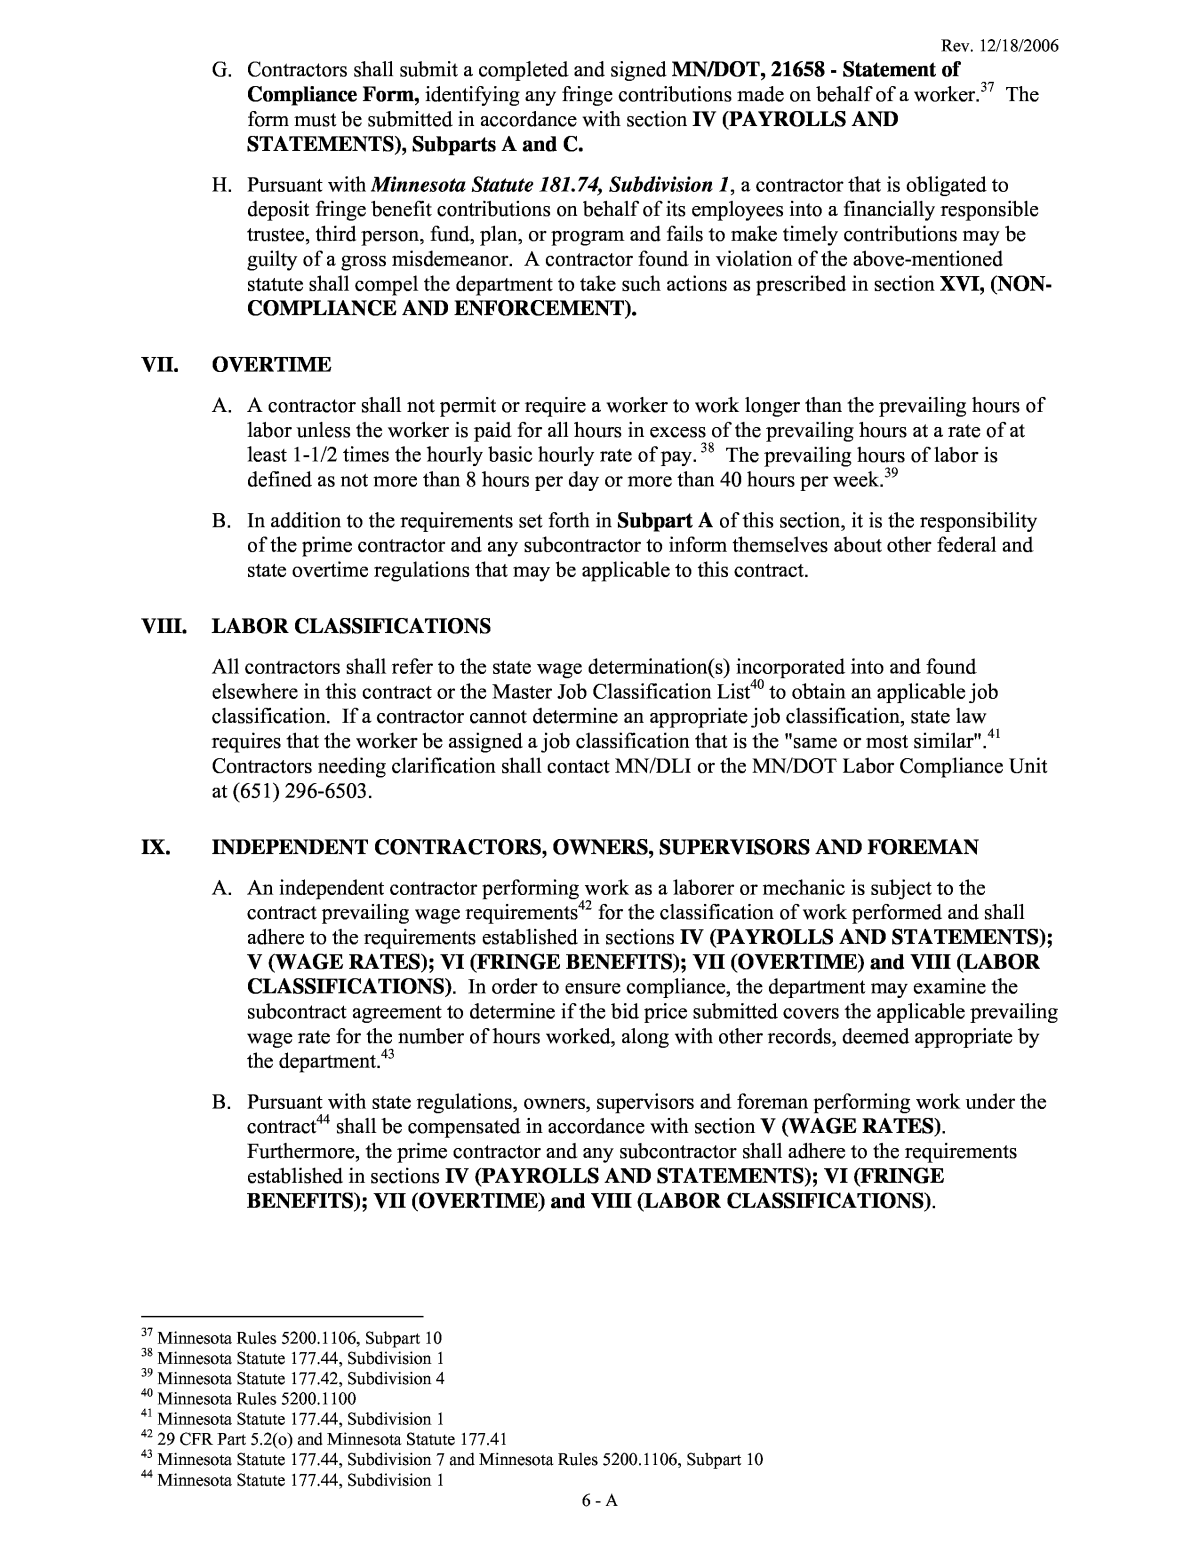 Appendix G Example Idiq Contract Language Indefinite Delivery Indefinite Quantity Contracting Practices The National Academies Press